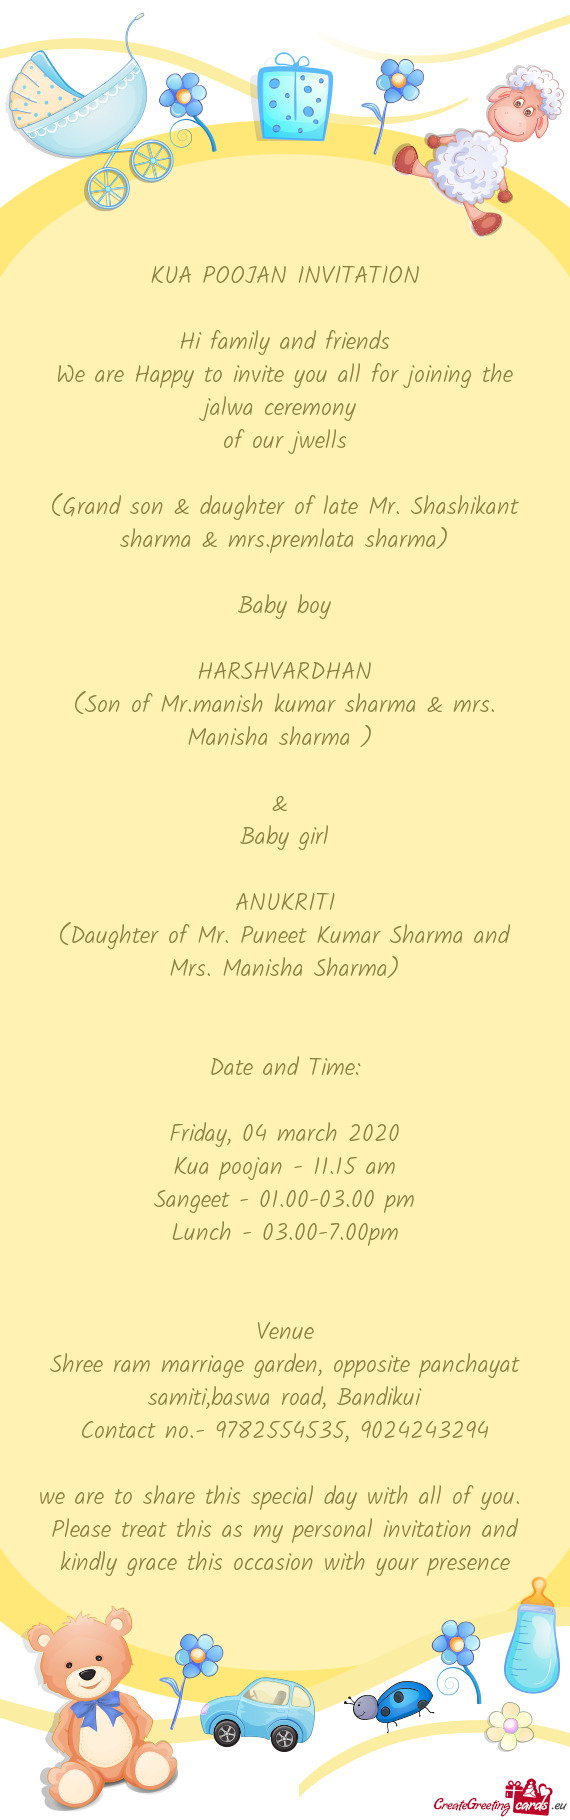 (Son of Mr.manish kumar sharma & mrs. Manisha sharma )